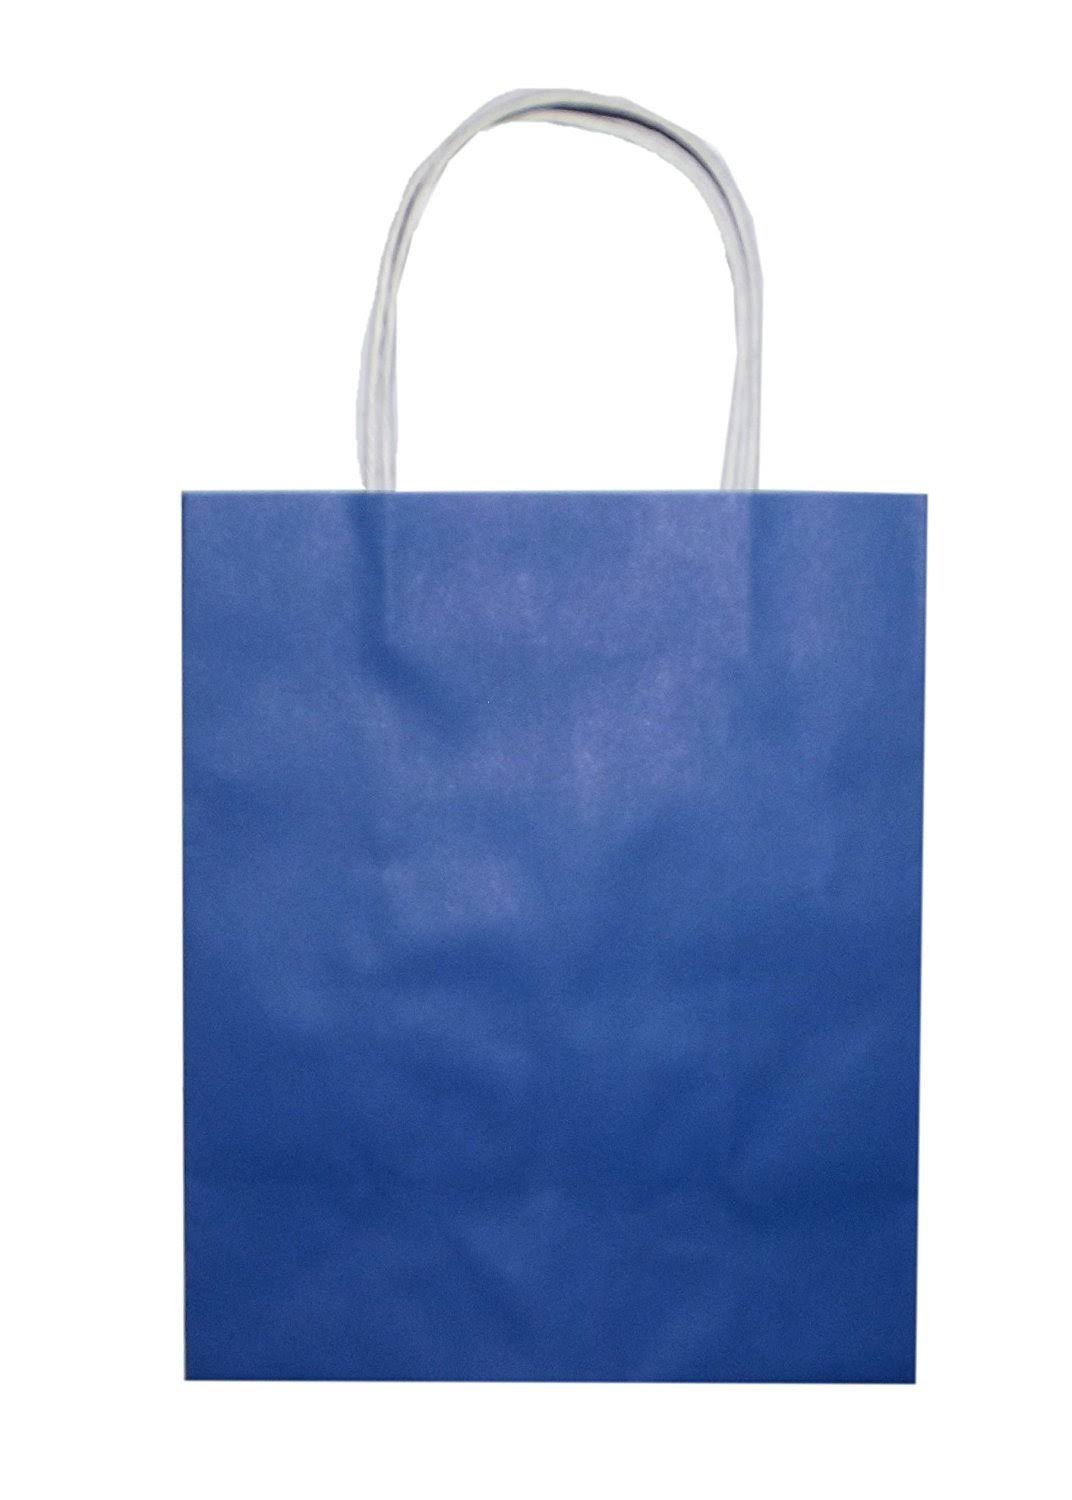 Amscan 169853-105 25 x 20 x 10 cm Paper Gift Bags